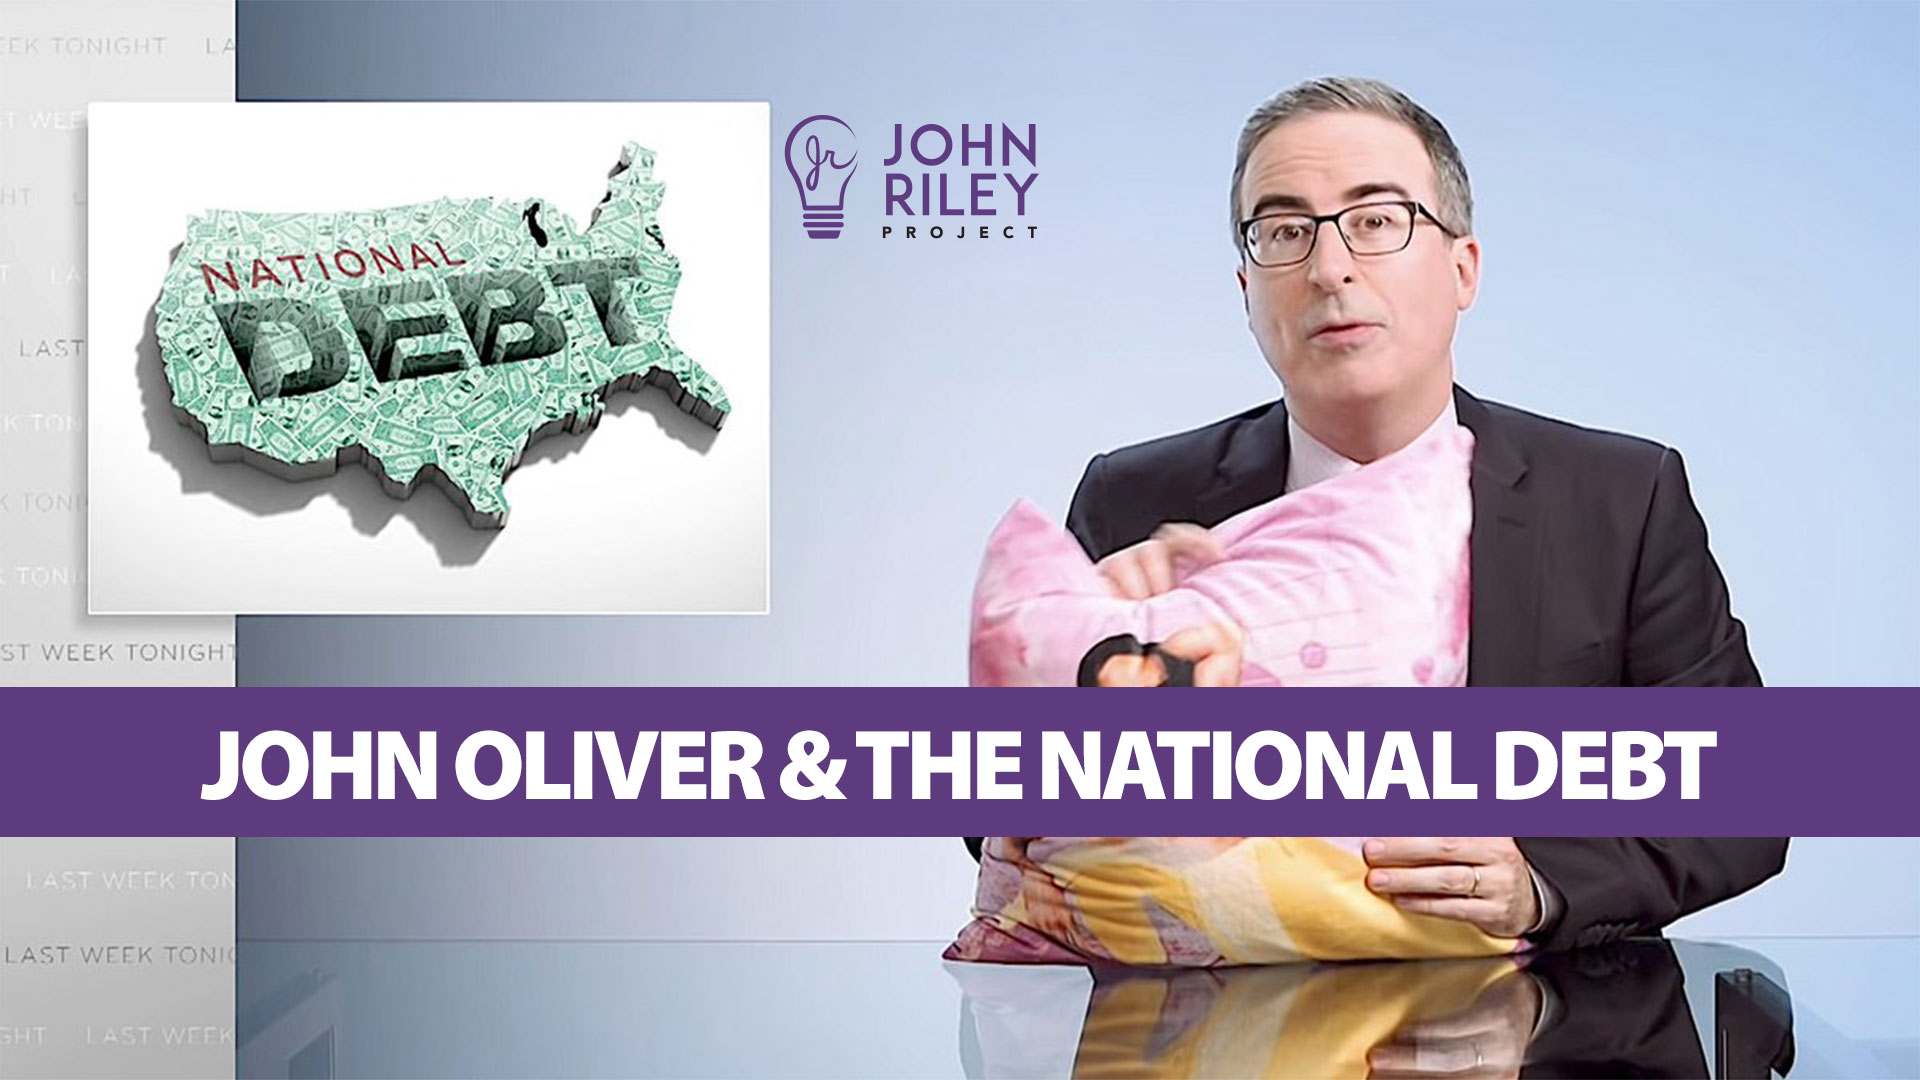 john oliver, national debt, john riley project, jrp0220